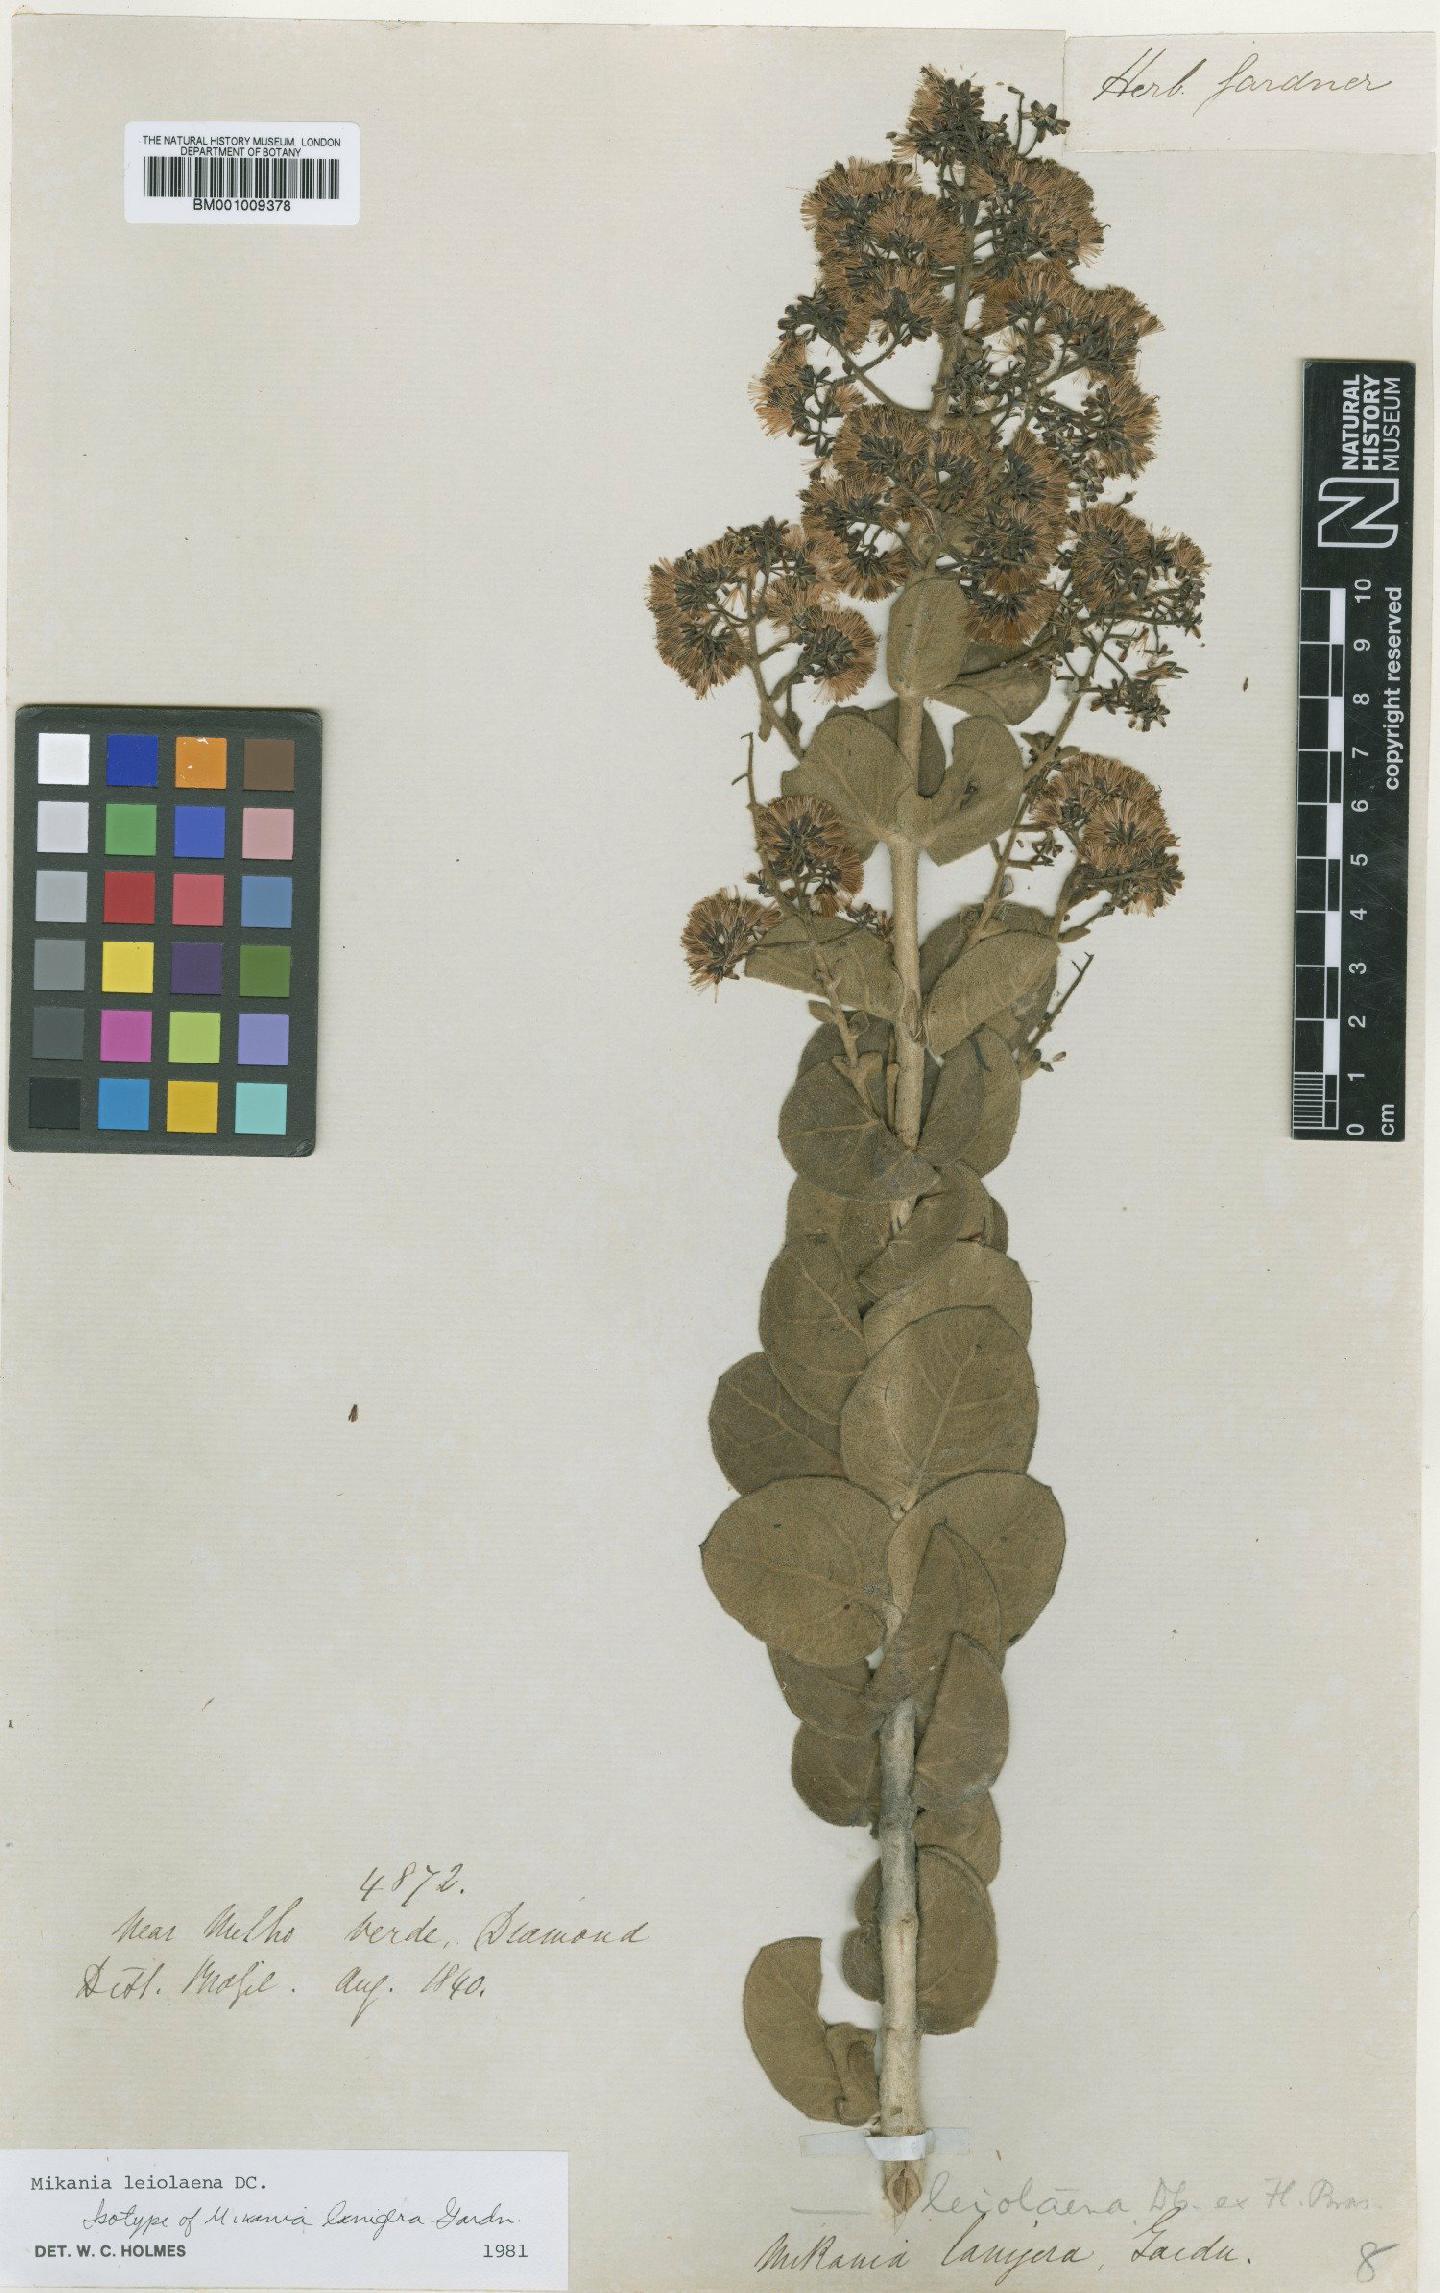 To NHMUK collection (Mikania leiolaena DC.; Isotype; NHMUK:ecatalogue:608423)